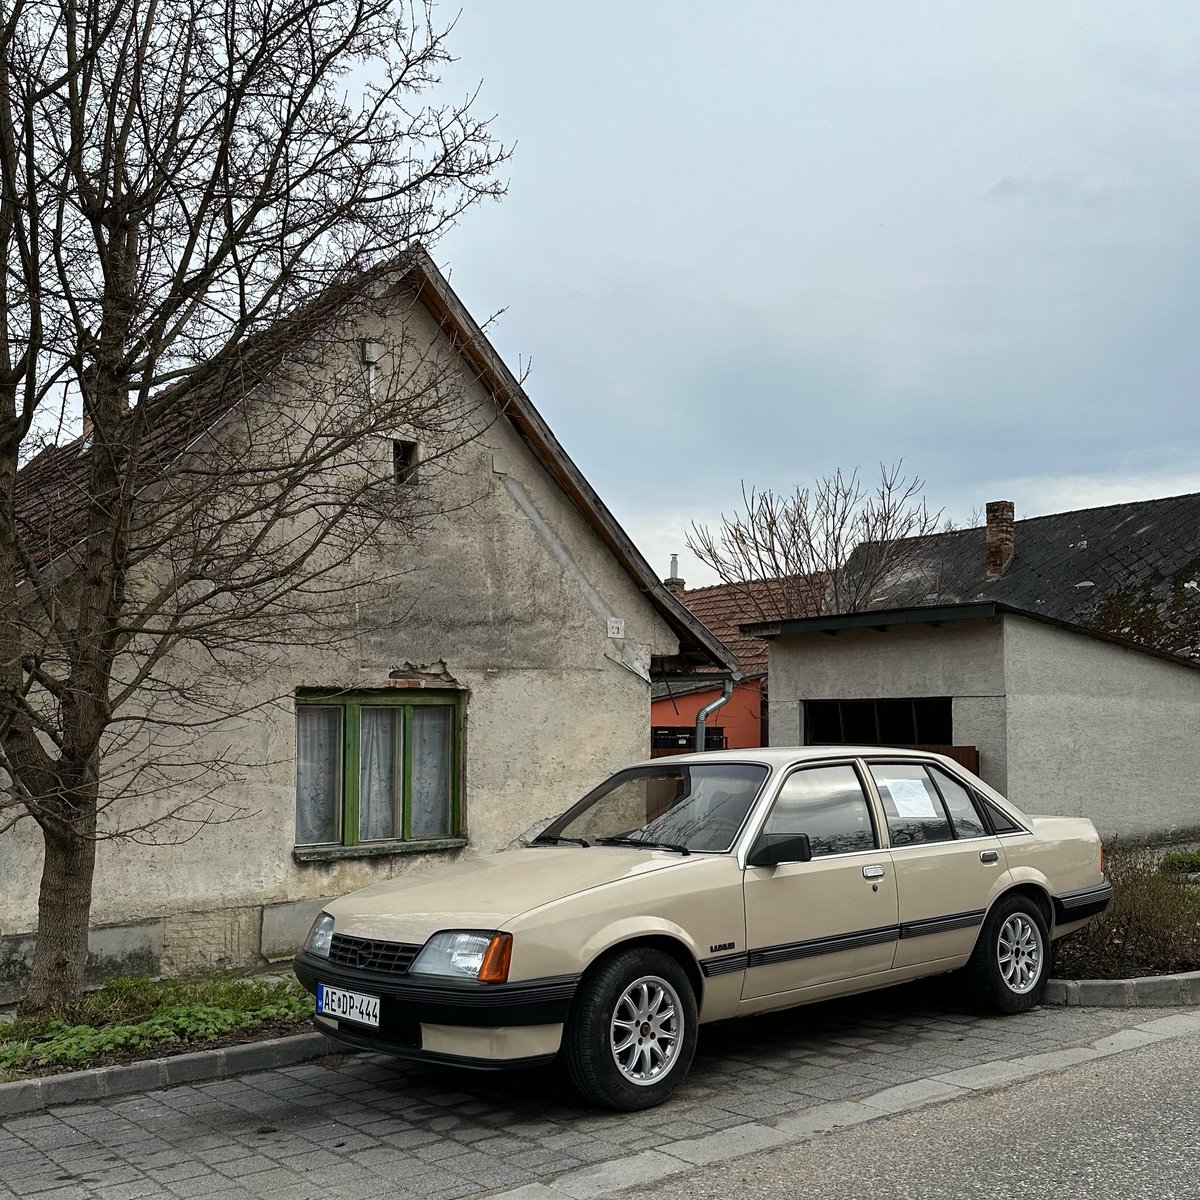 “An unashamedly refined, executive saloon.”
Opel Rekord (E2, 1983) spotted in Törökbálint/Hungary.
#Opel #OpelRekord #Vauxhall #VauxhallCarlton 
@GeorgeCochrane1 @addict_car